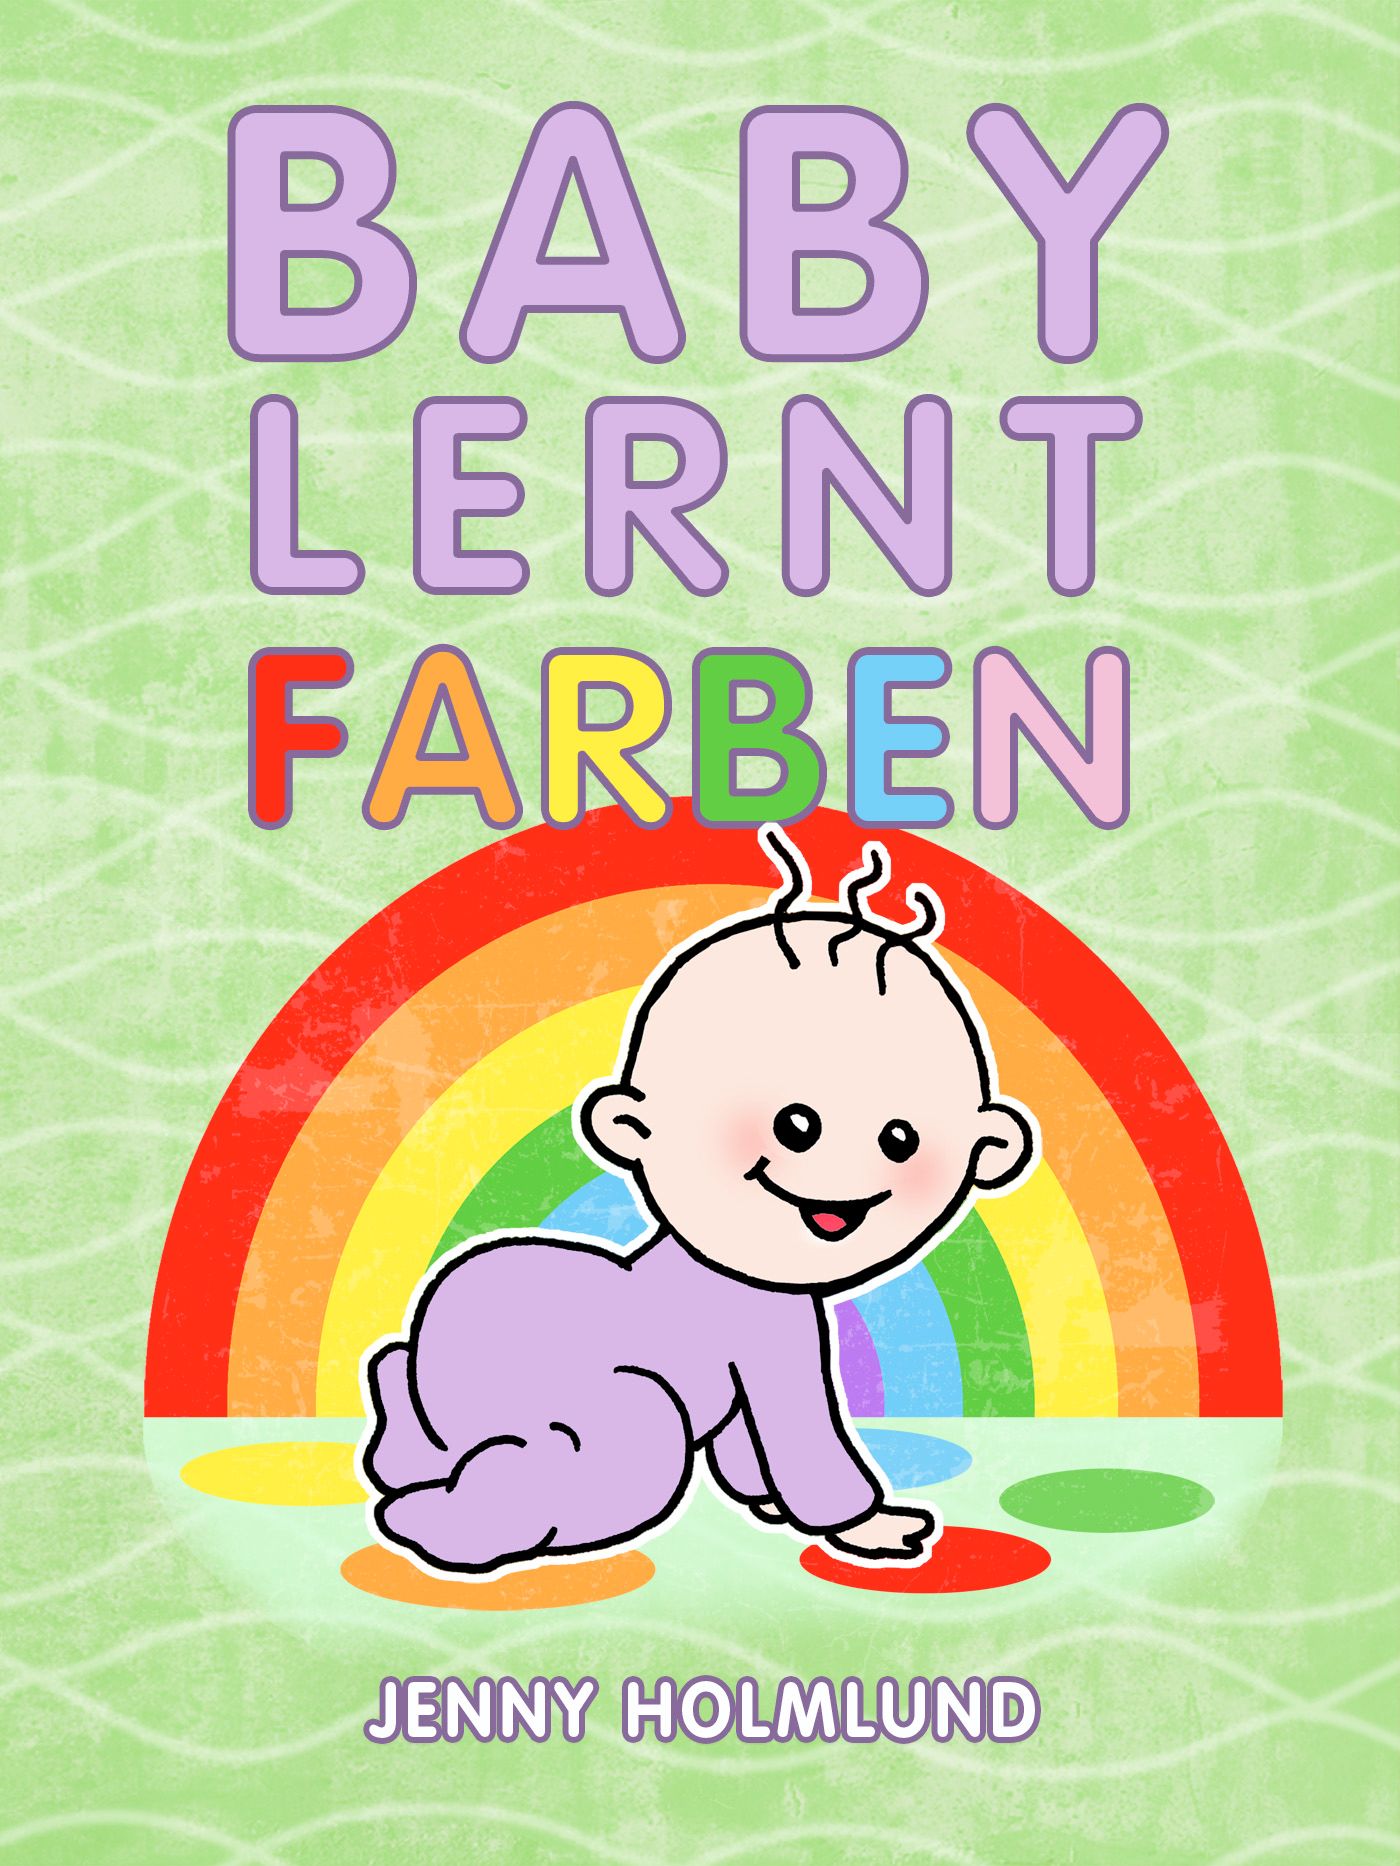 Baby Lernt Farben, eBook by Jenny Holmlund